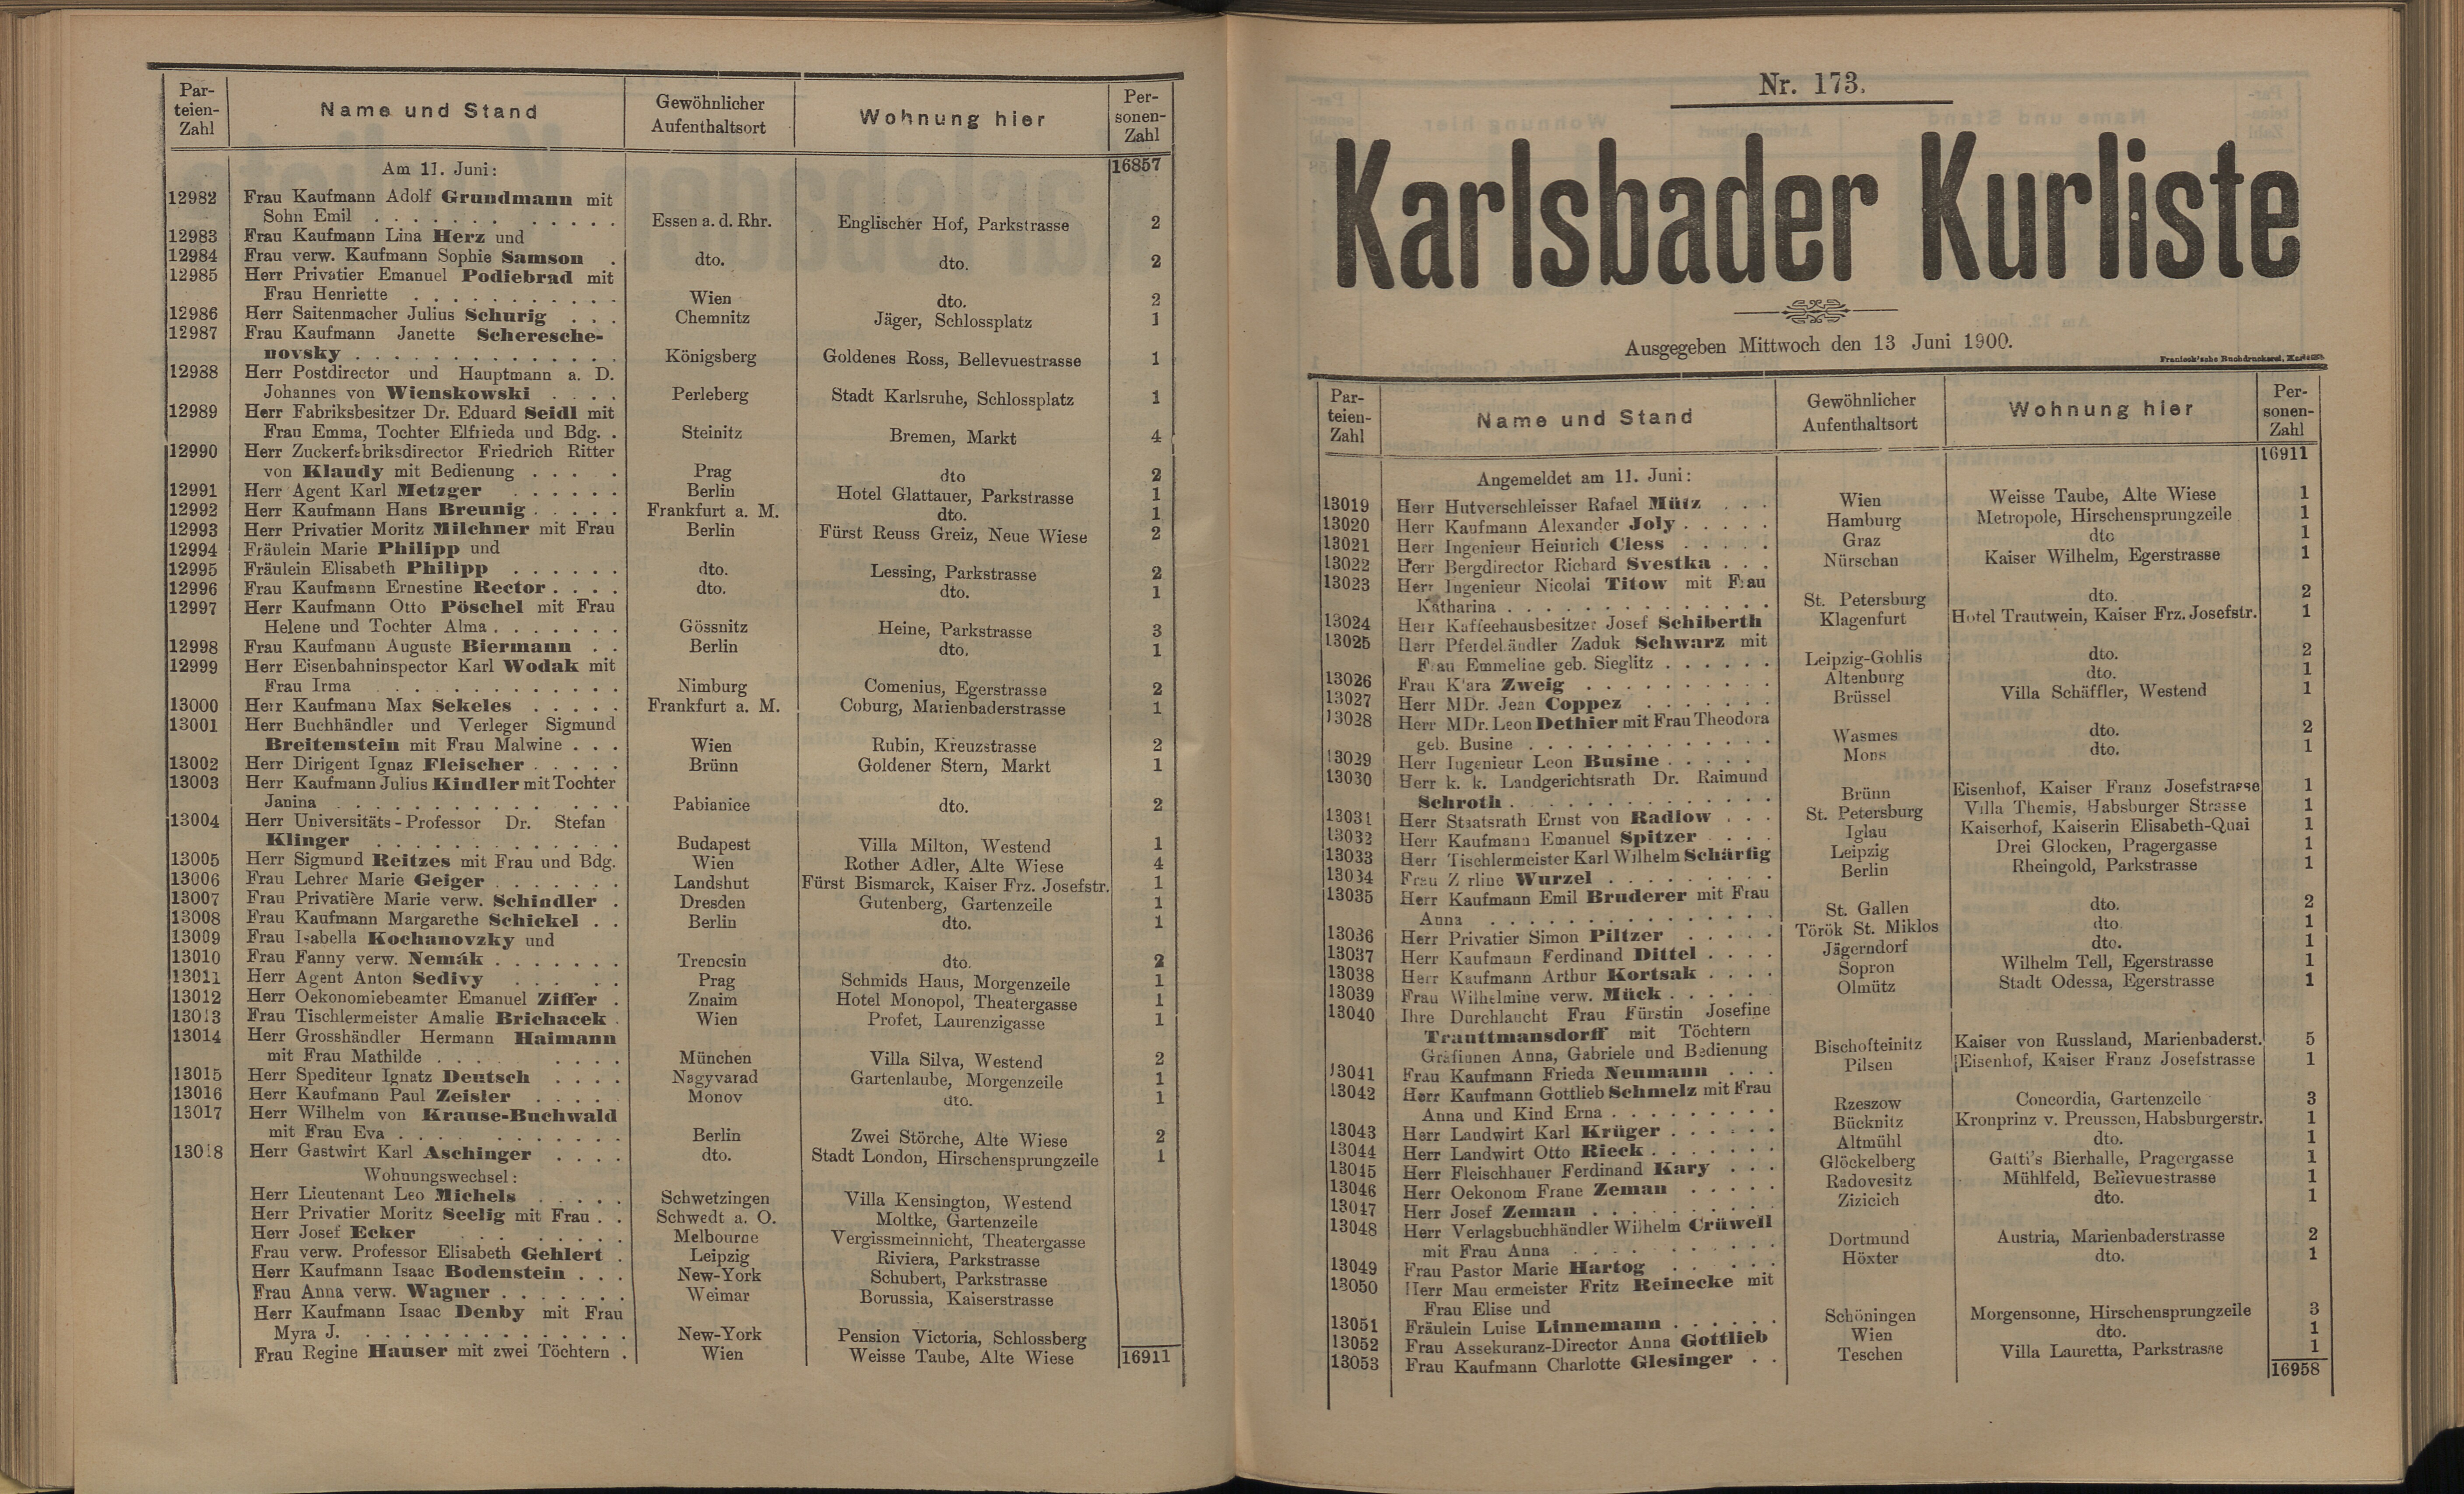 193. soap-kv_knihovna_karlsbader-kurliste-1900_1940